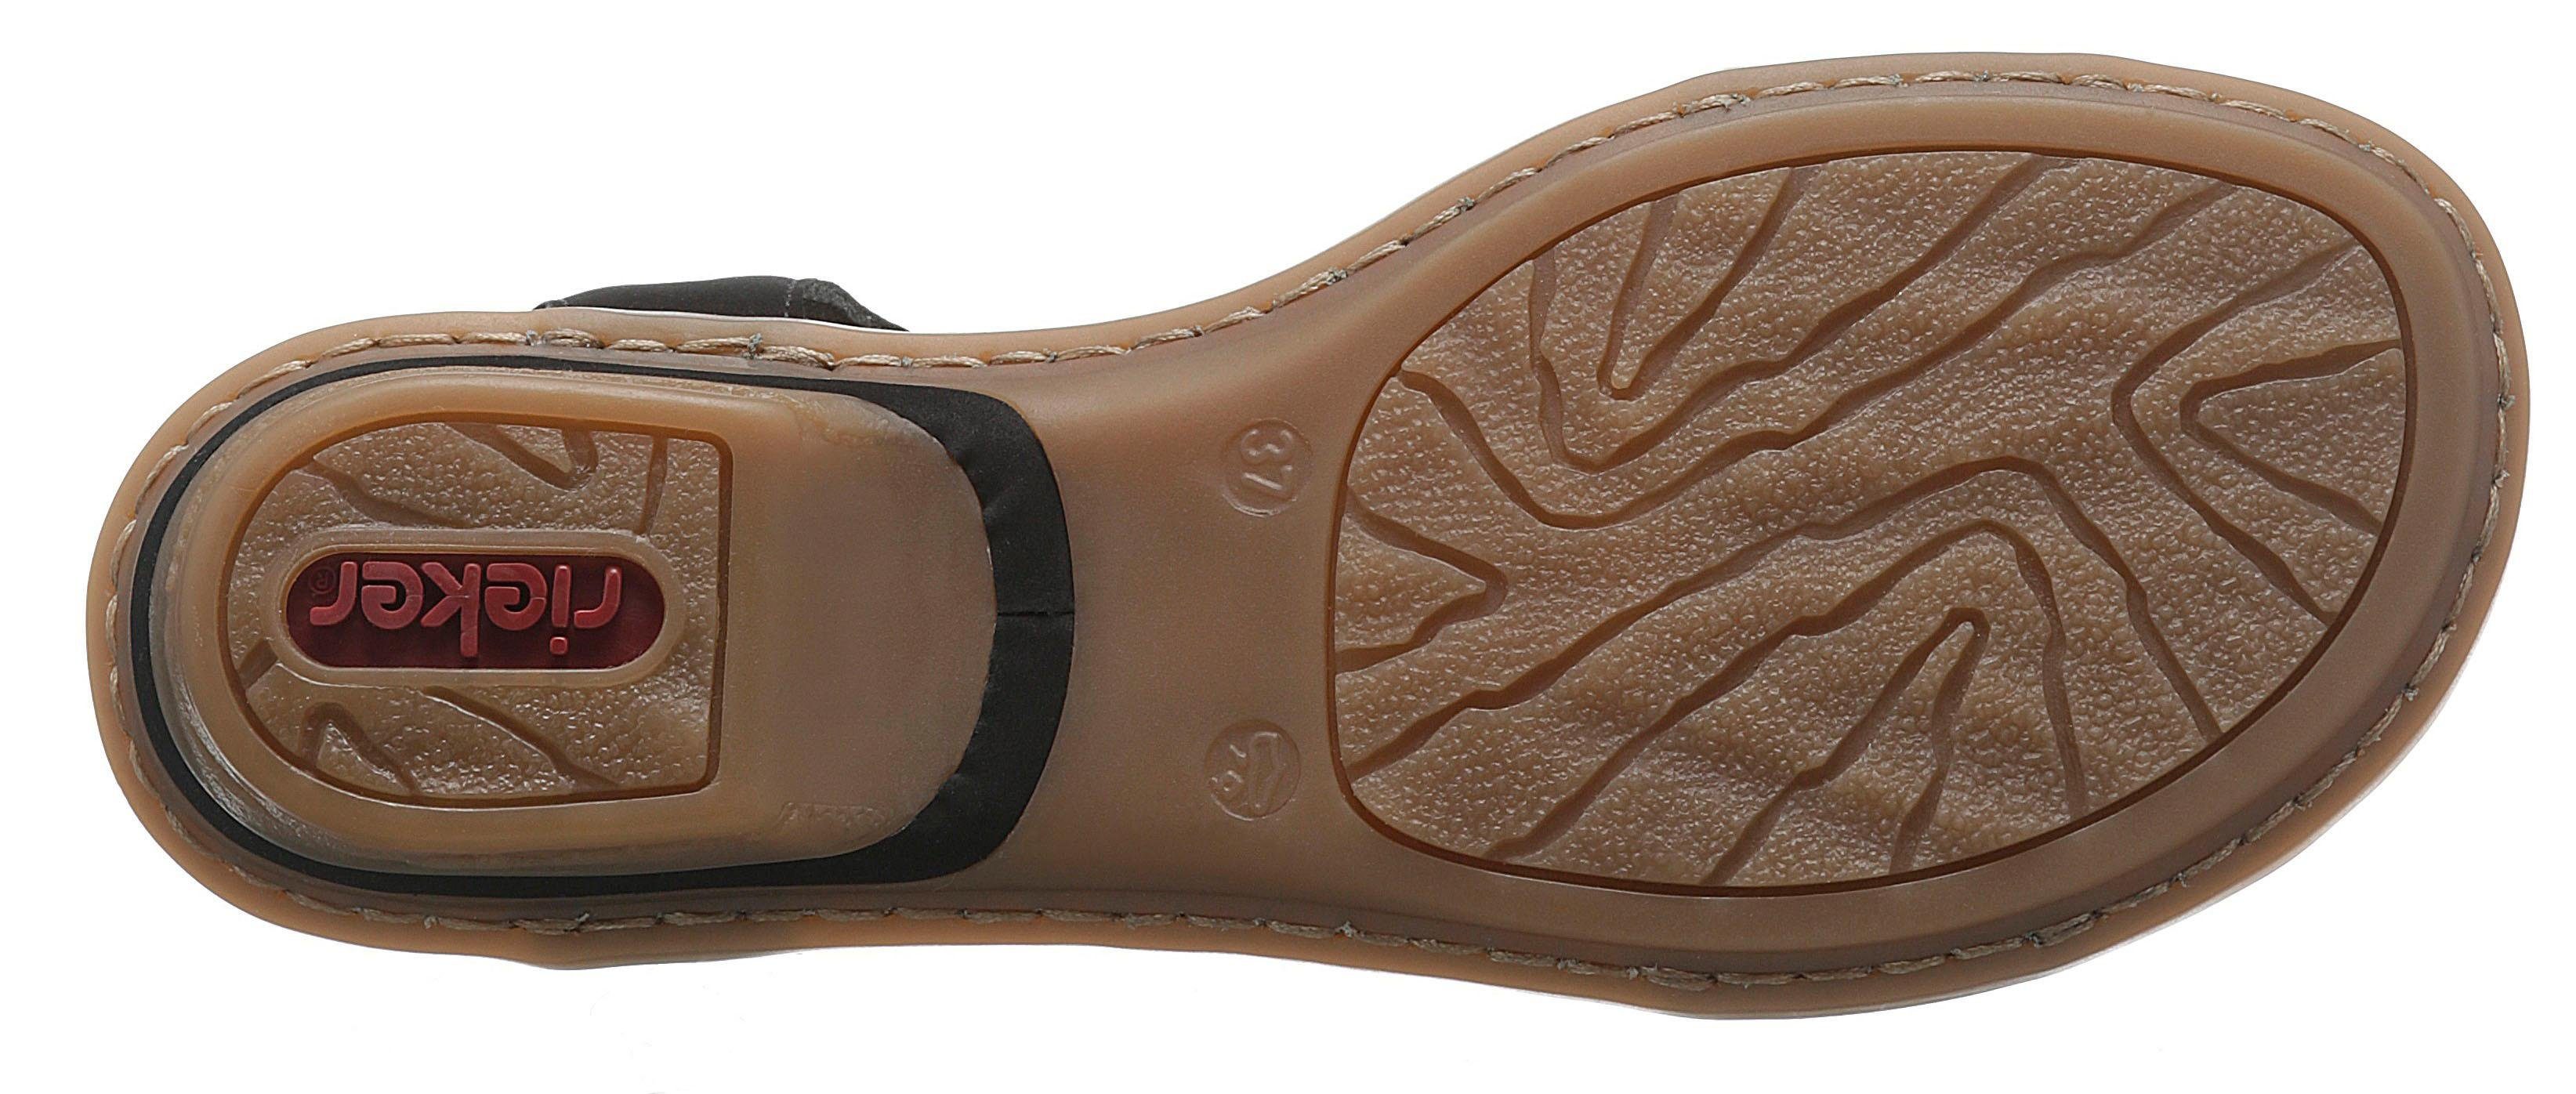 Sandalette im Rieker Look modernen